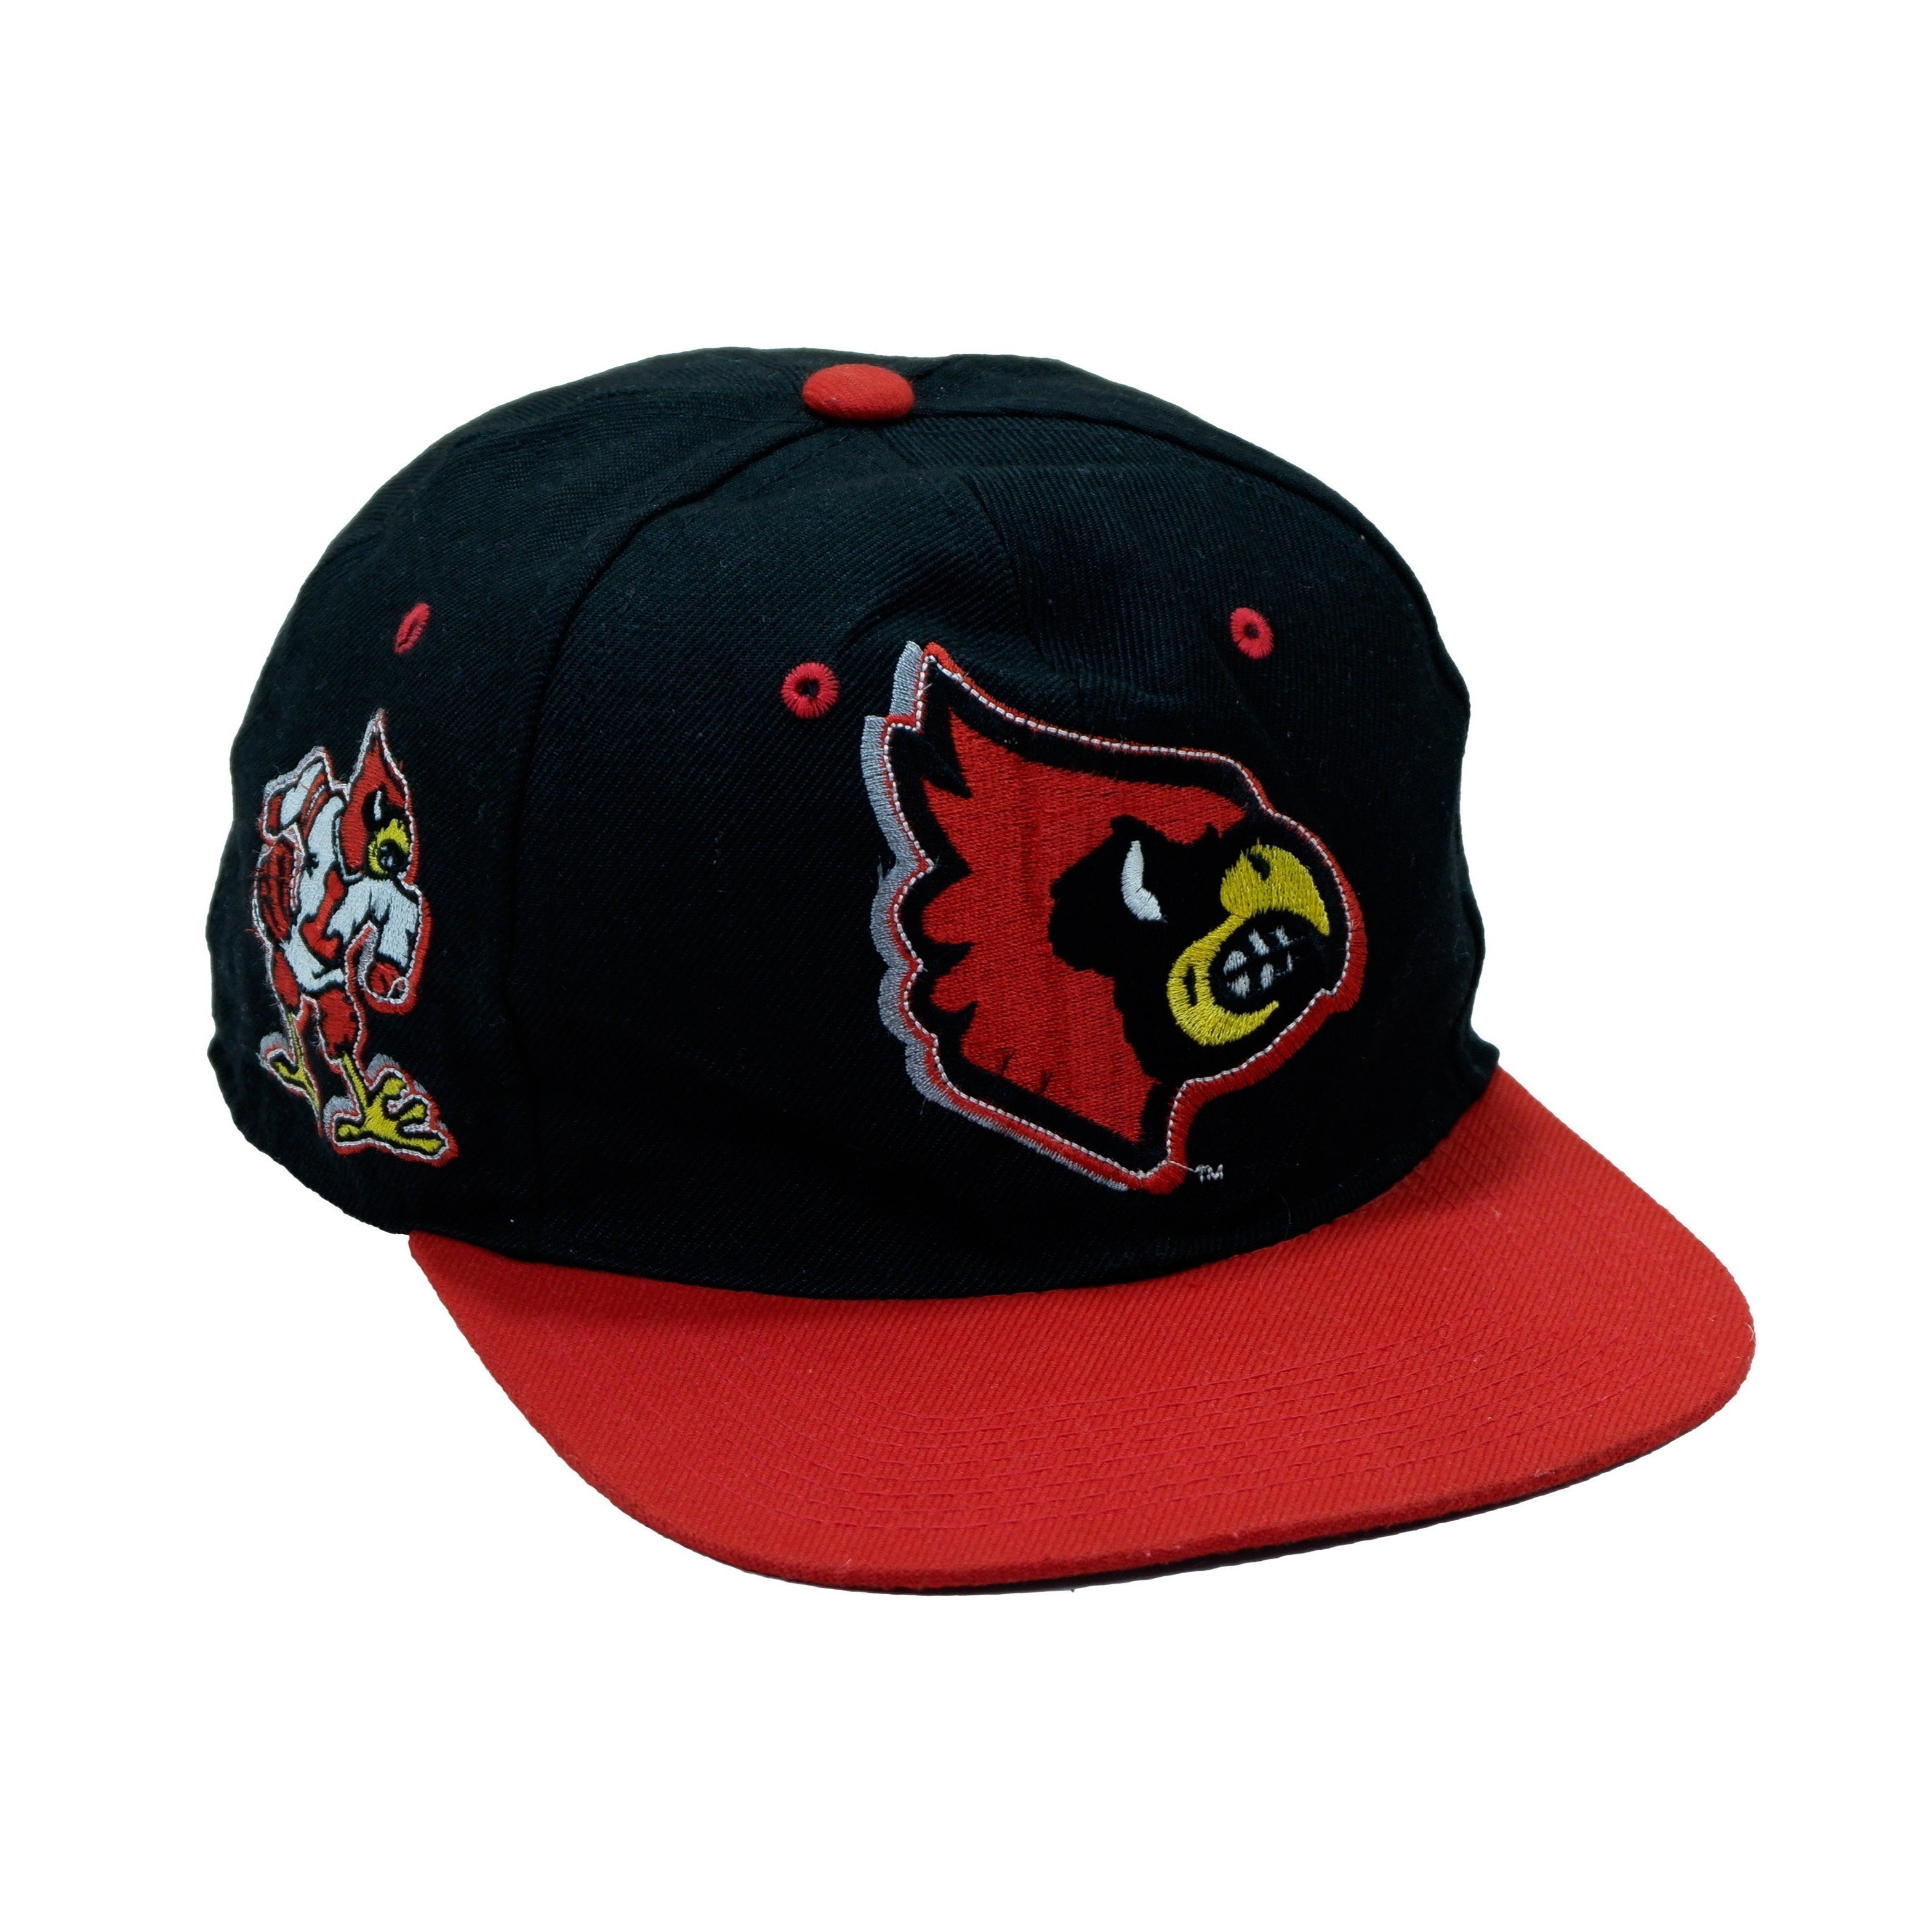 Vintage 90s University of Louisville Cardinals Cards School College Kentucky NCAA Wool Fitted Hat Baseball Cap 7 1/2